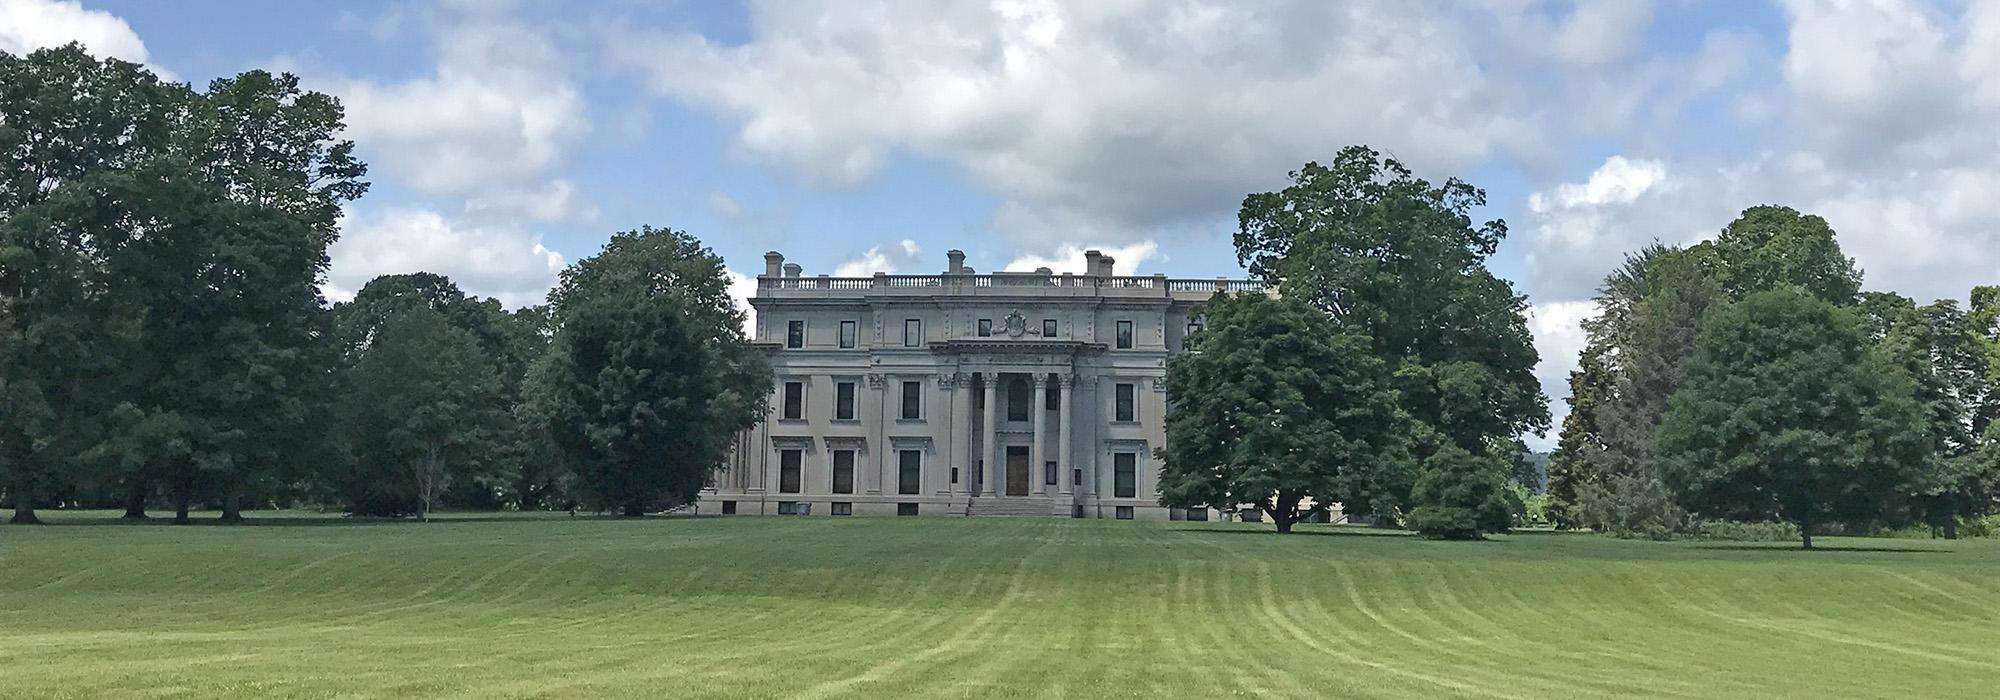 Vanderbilt Mansion National Historic Site, Hyde Park, NY